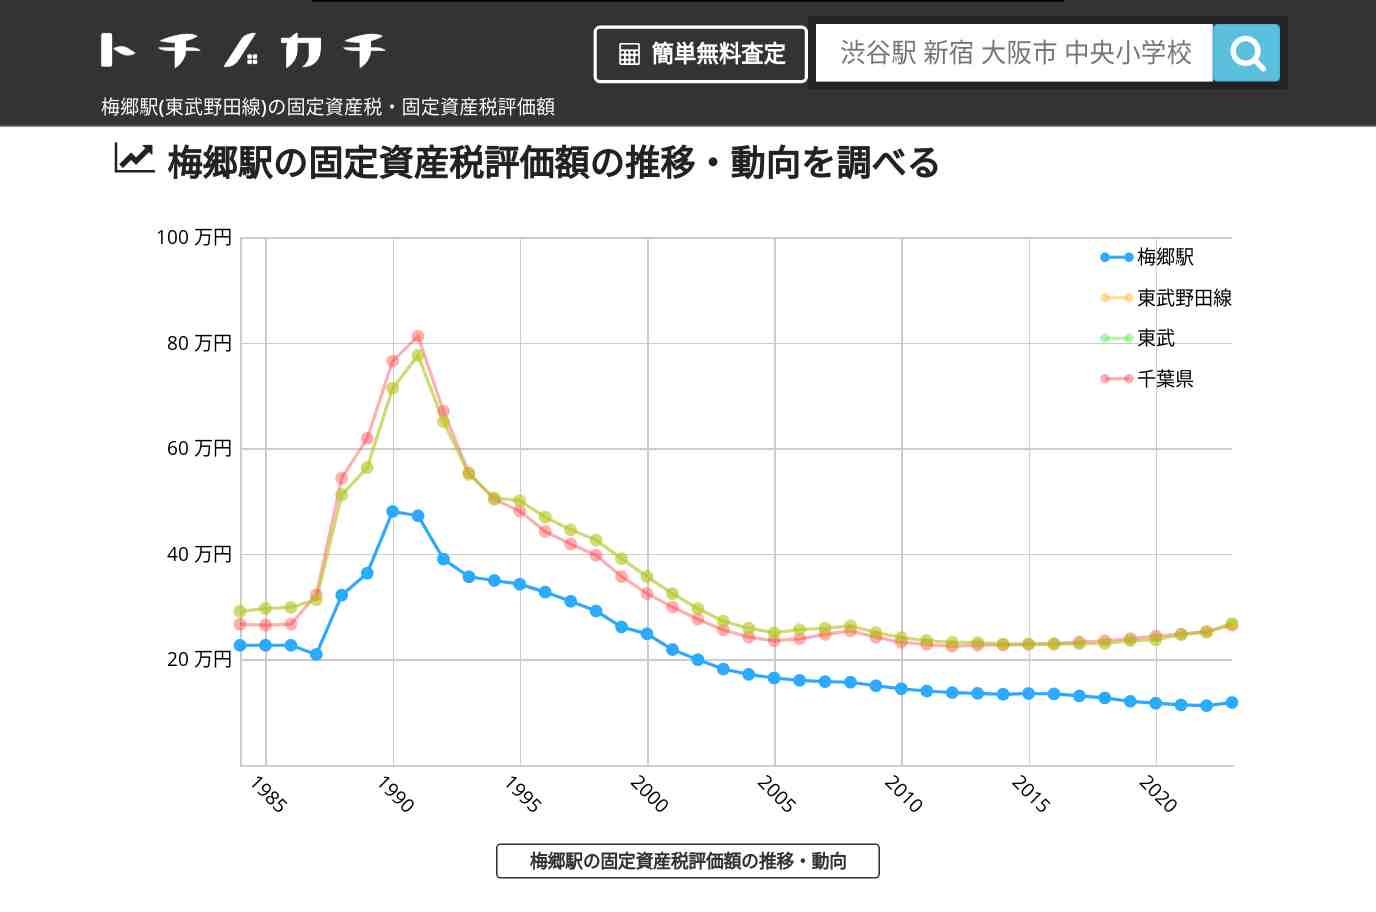 梅郷駅(東武野田線)の固定資産税・固定資産税評価額 | トチノカチ